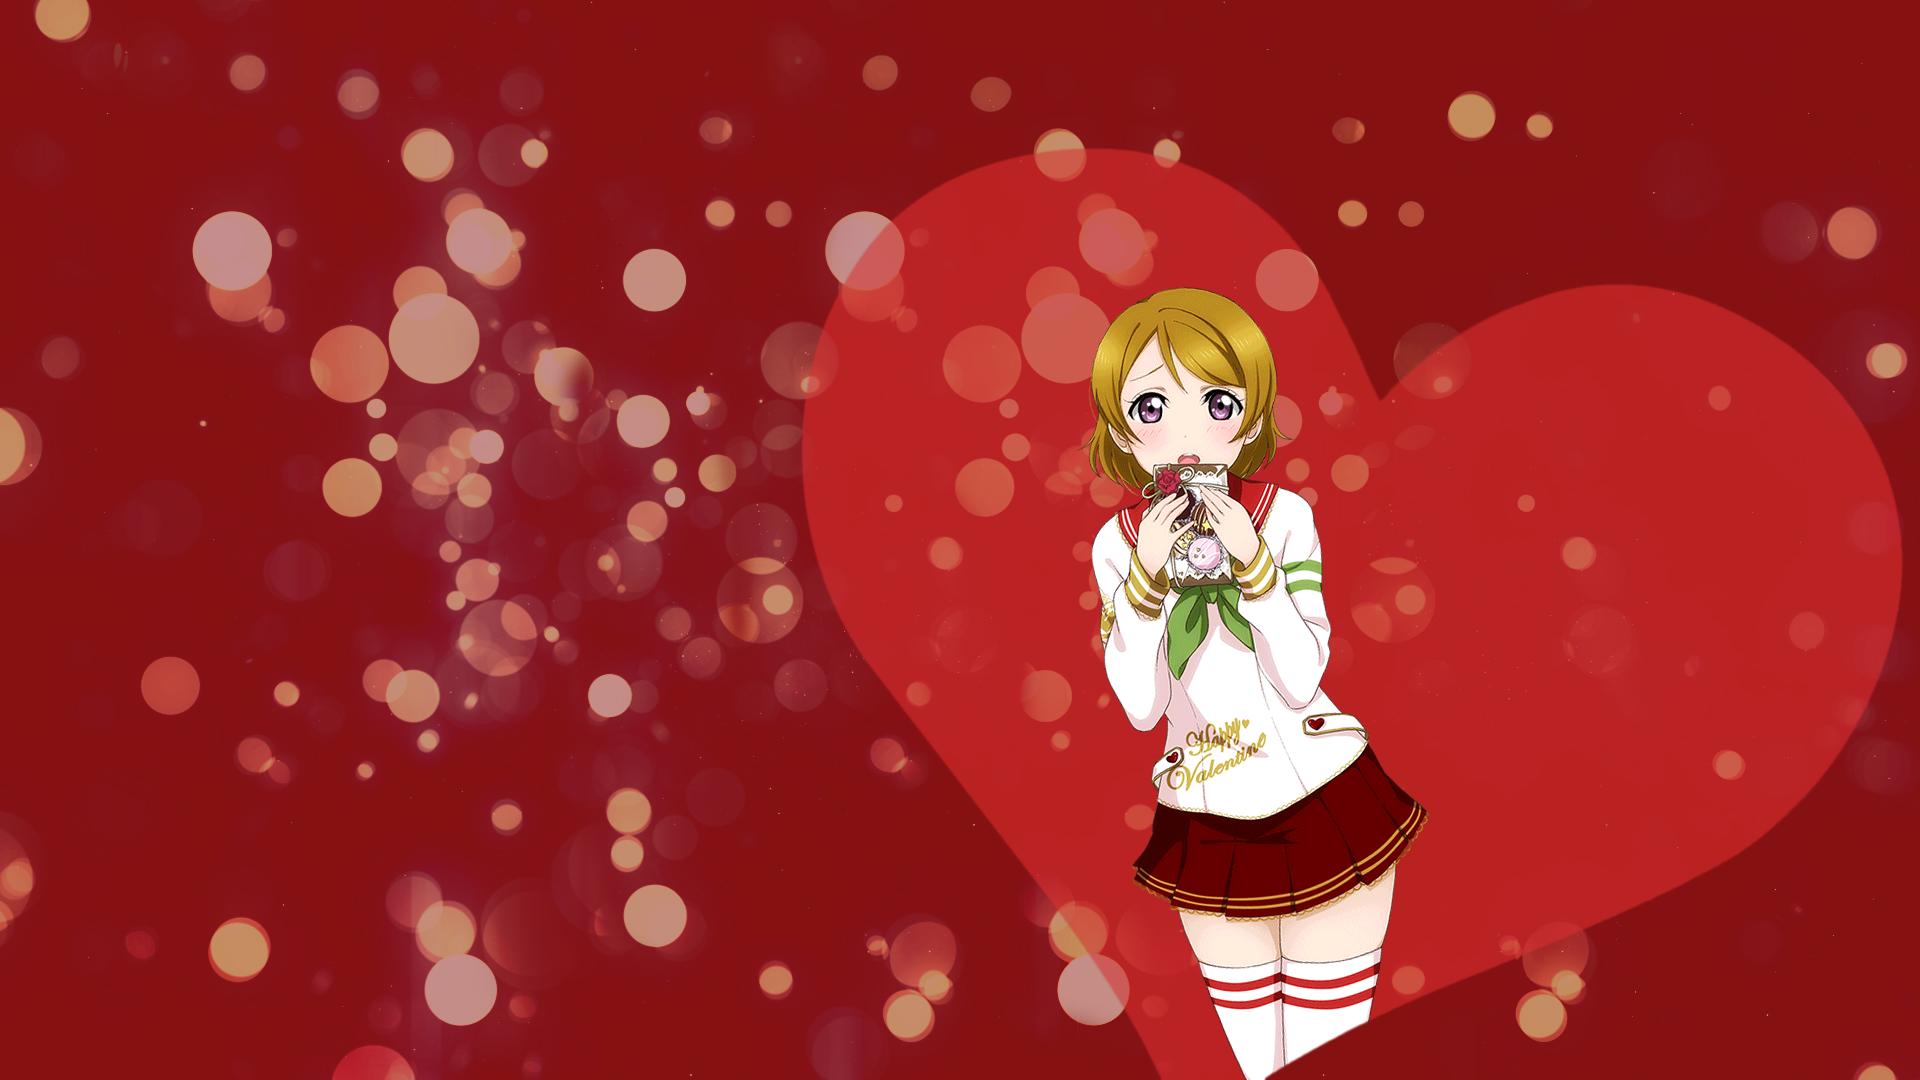 Descarga gratis la imagen Animado, Hanayo Koizumi, ¡ama Vive! en el escritorio de tu PC